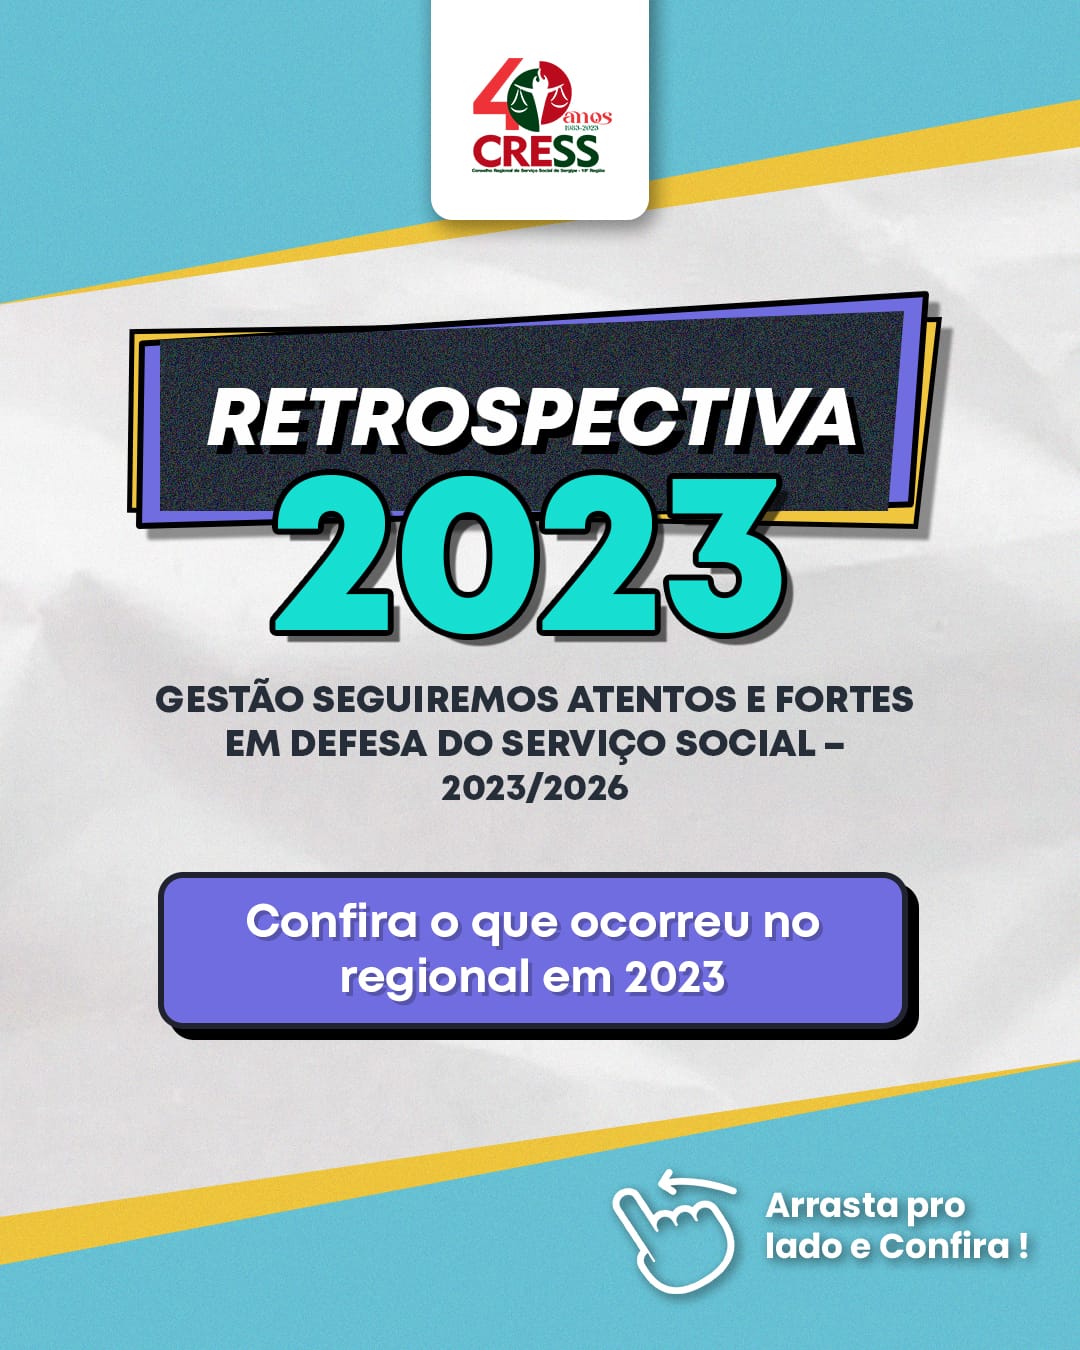 RETROSPECTIVA 2023 DO CRESS-SE